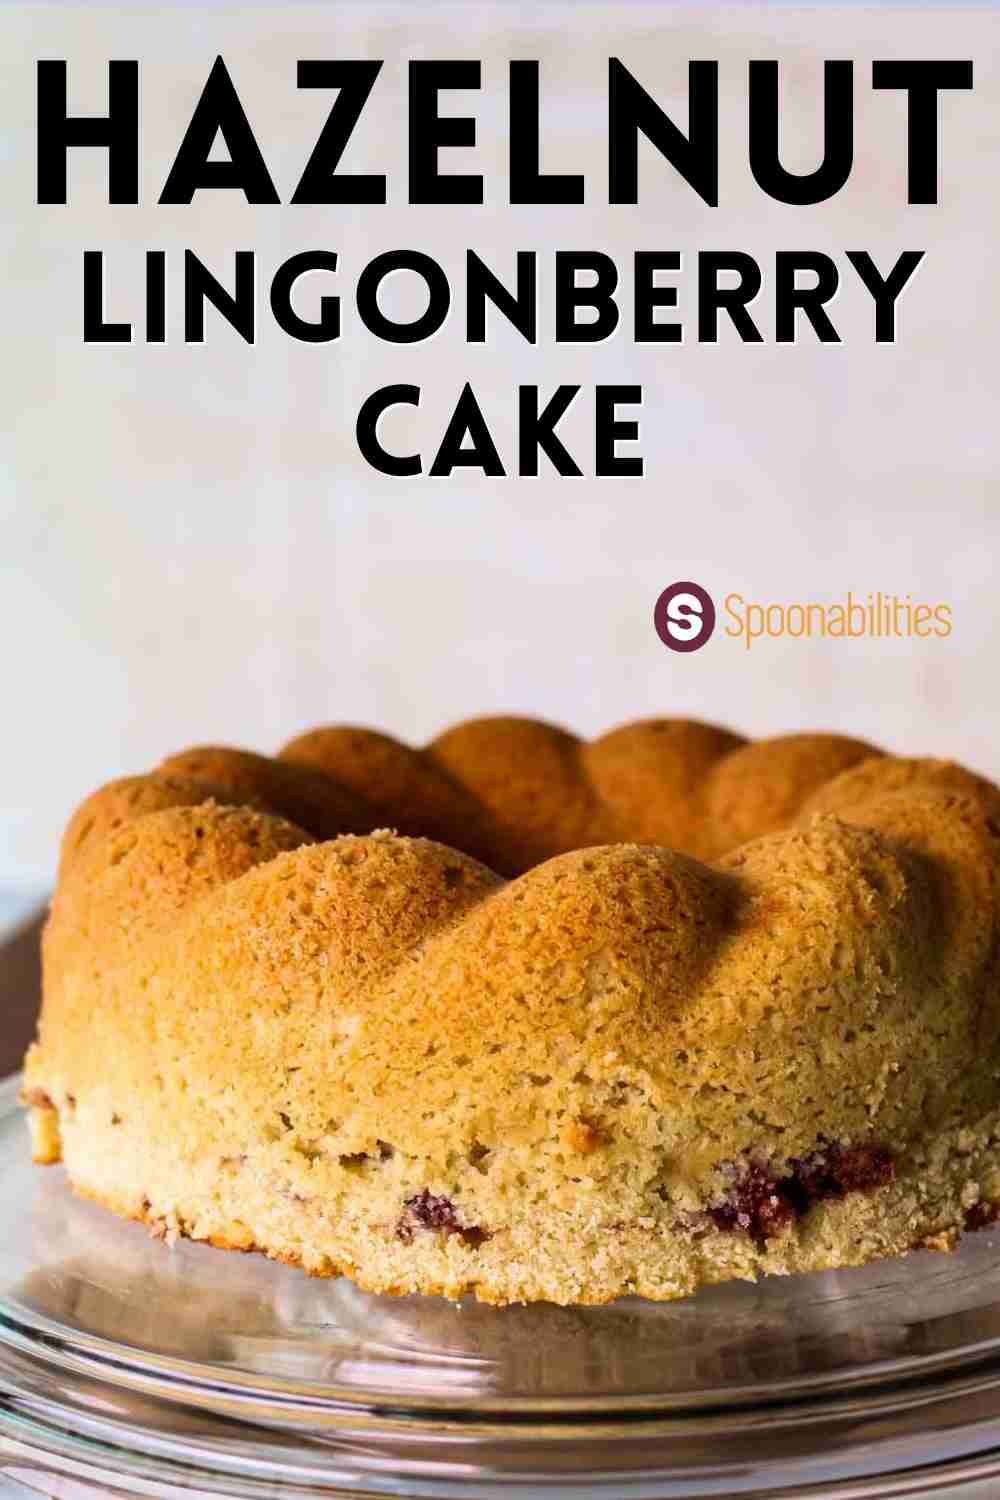 uncut Hazelnut Lingonberry Cake on a glass cake stand